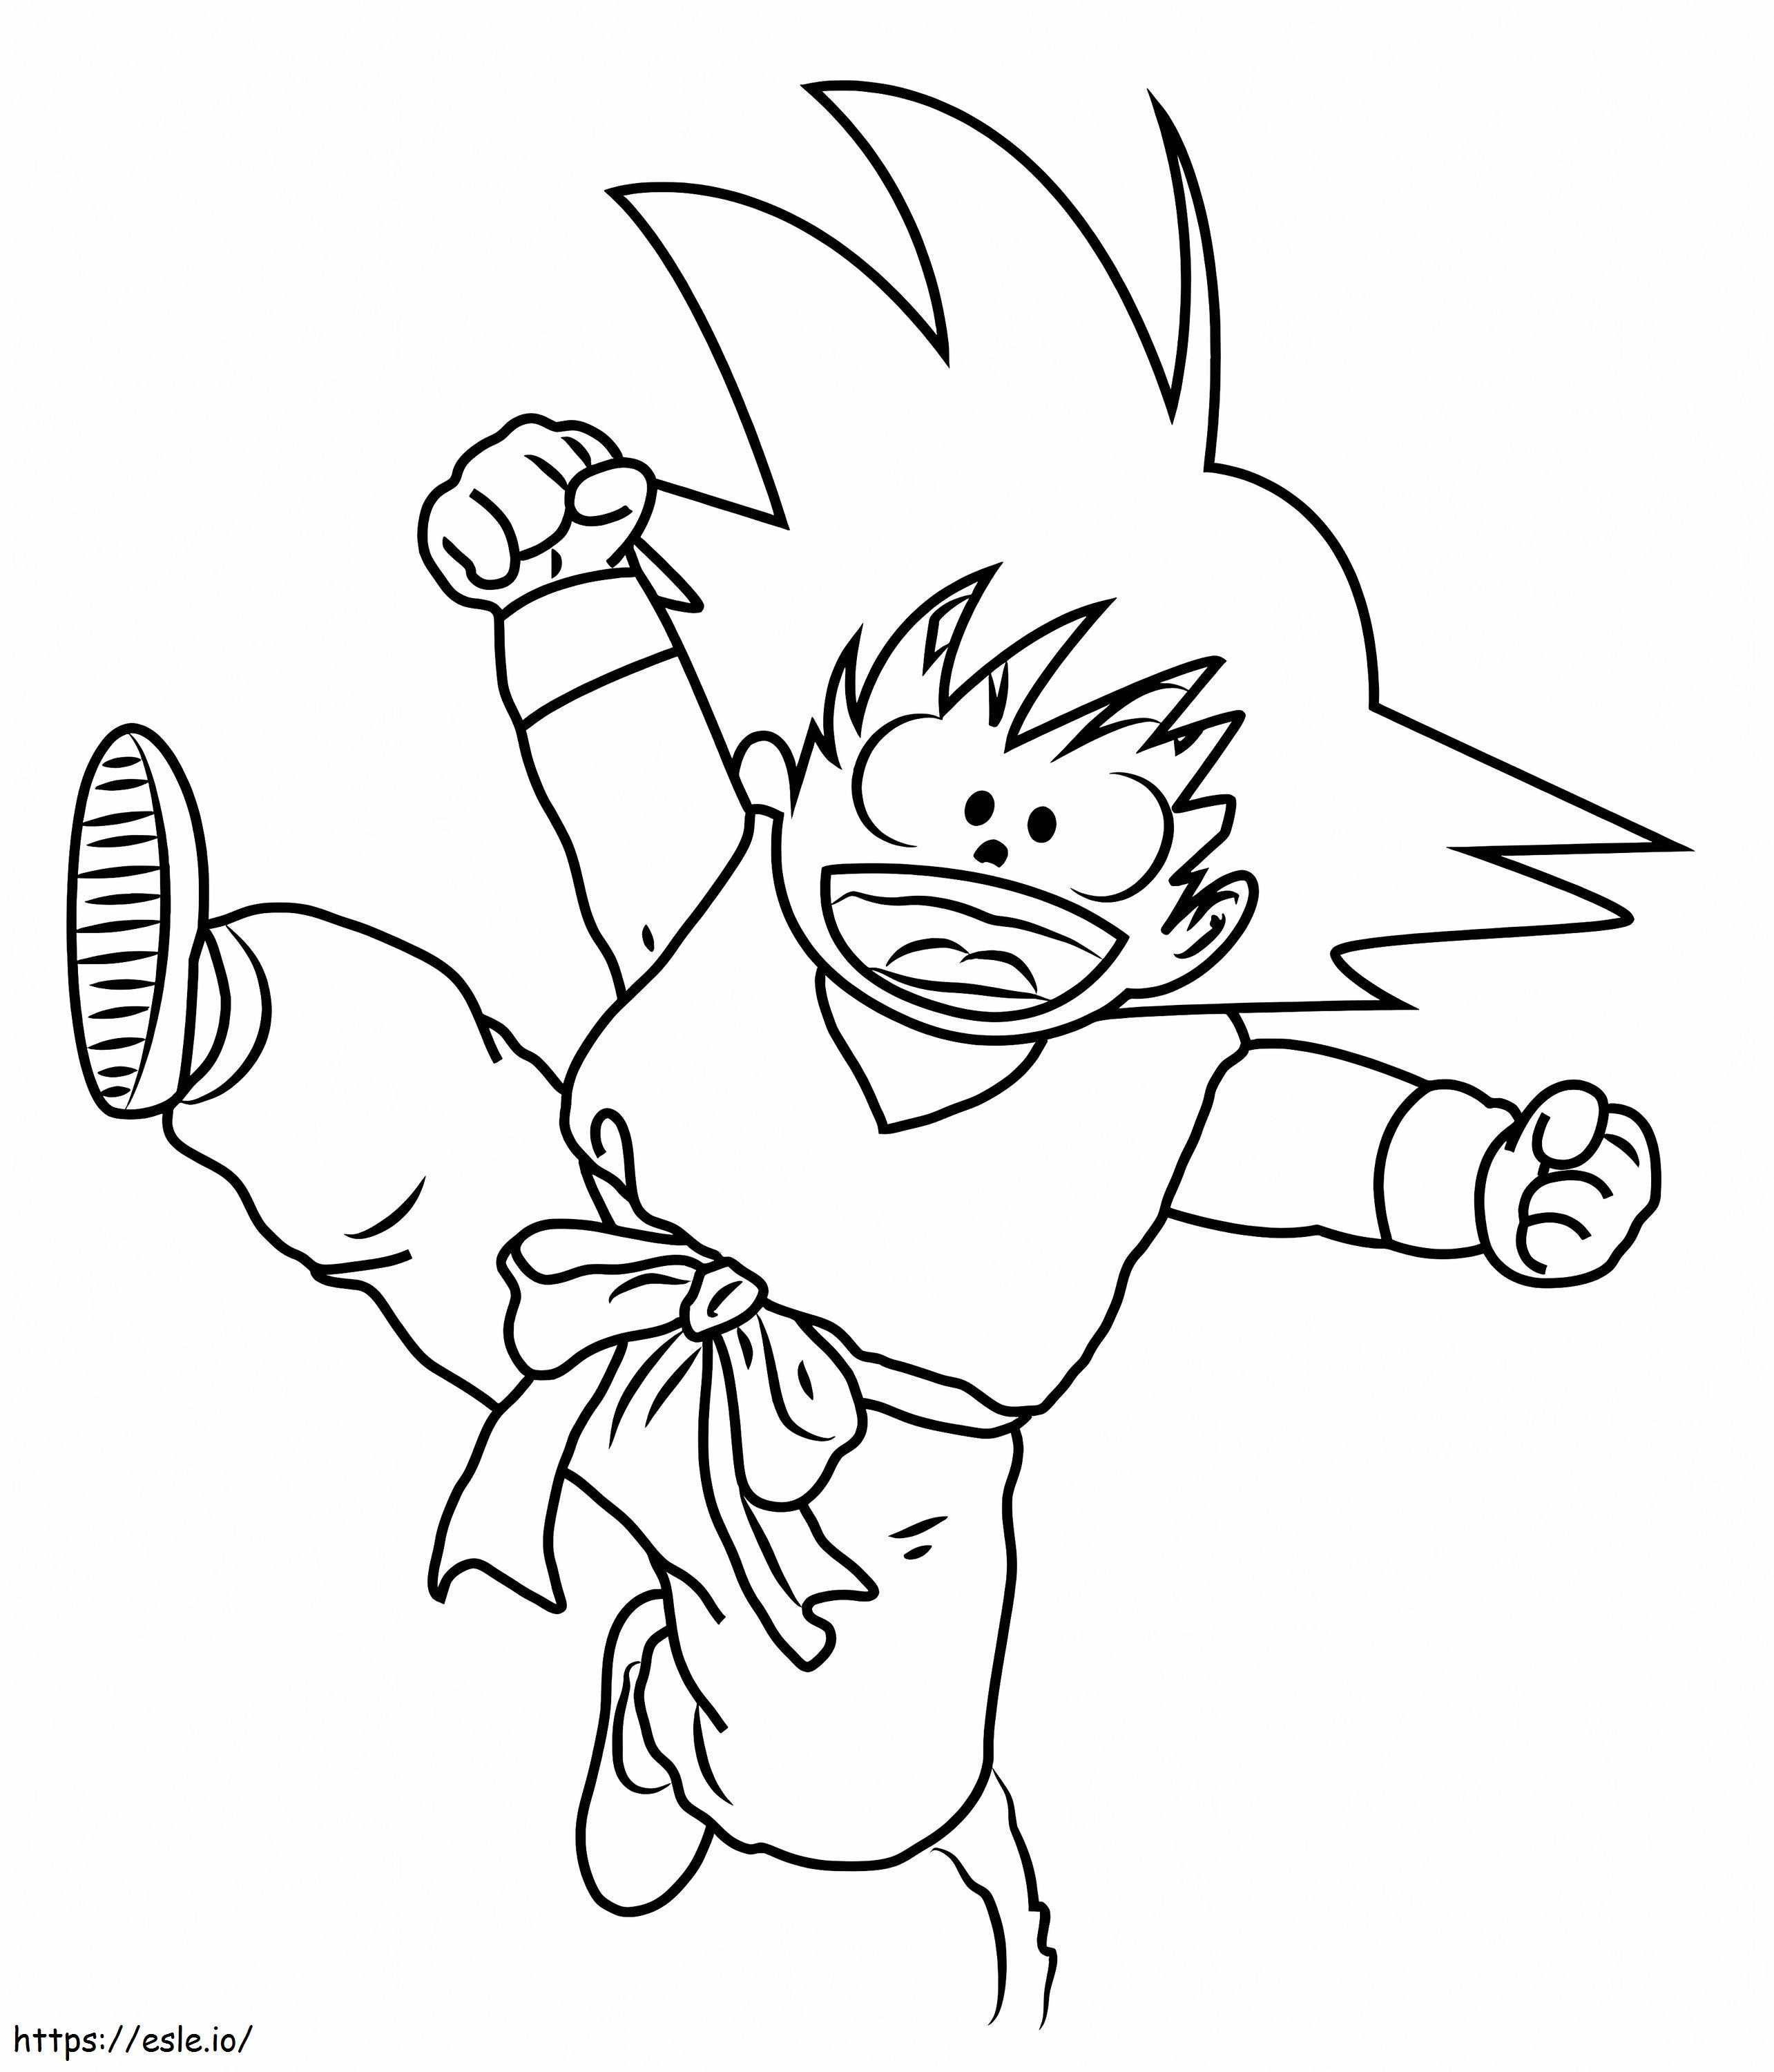 Fun Little Goku Jumping coloring page